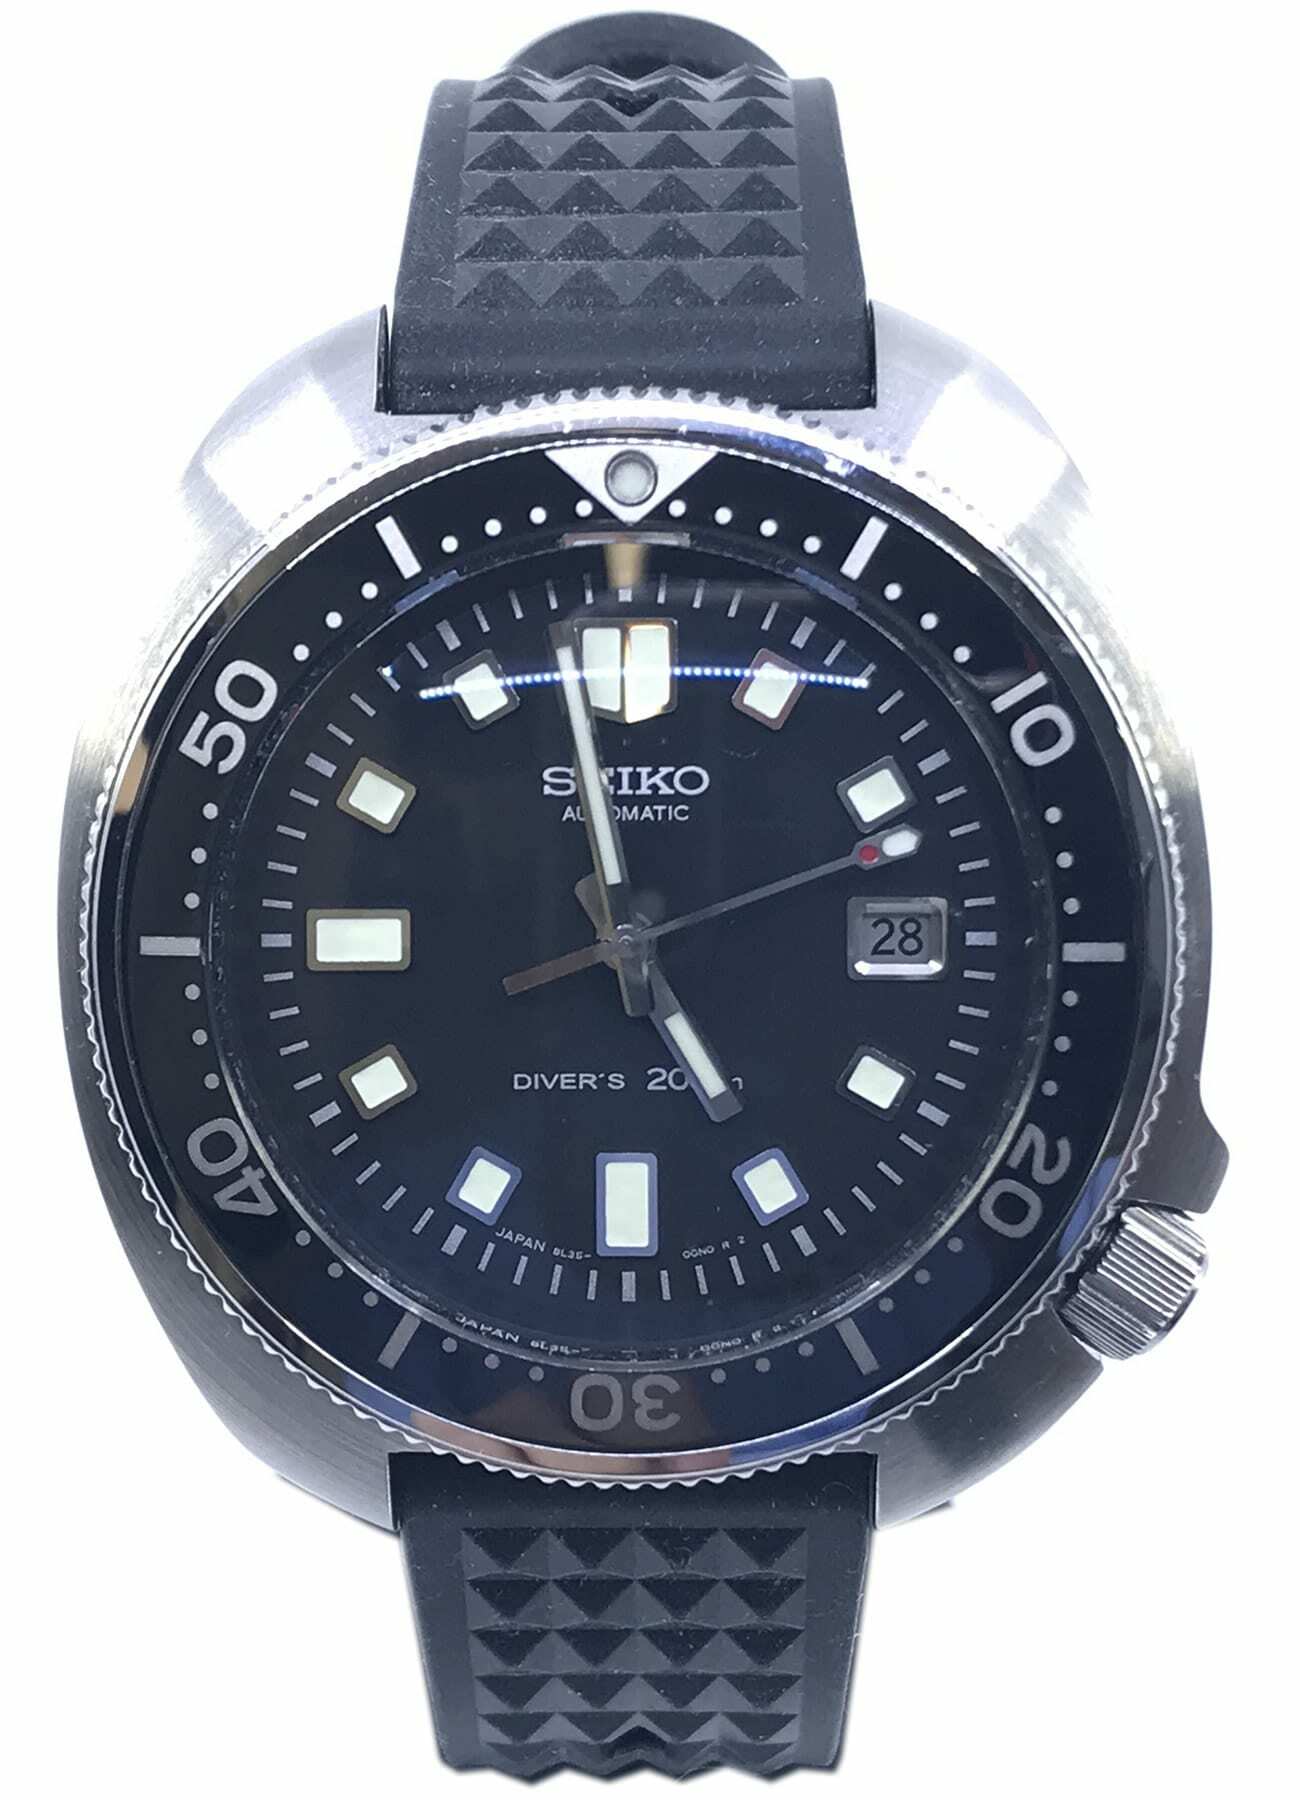 Seiko Prospex SLA033 Limited Edition - Exquisite Timepieces